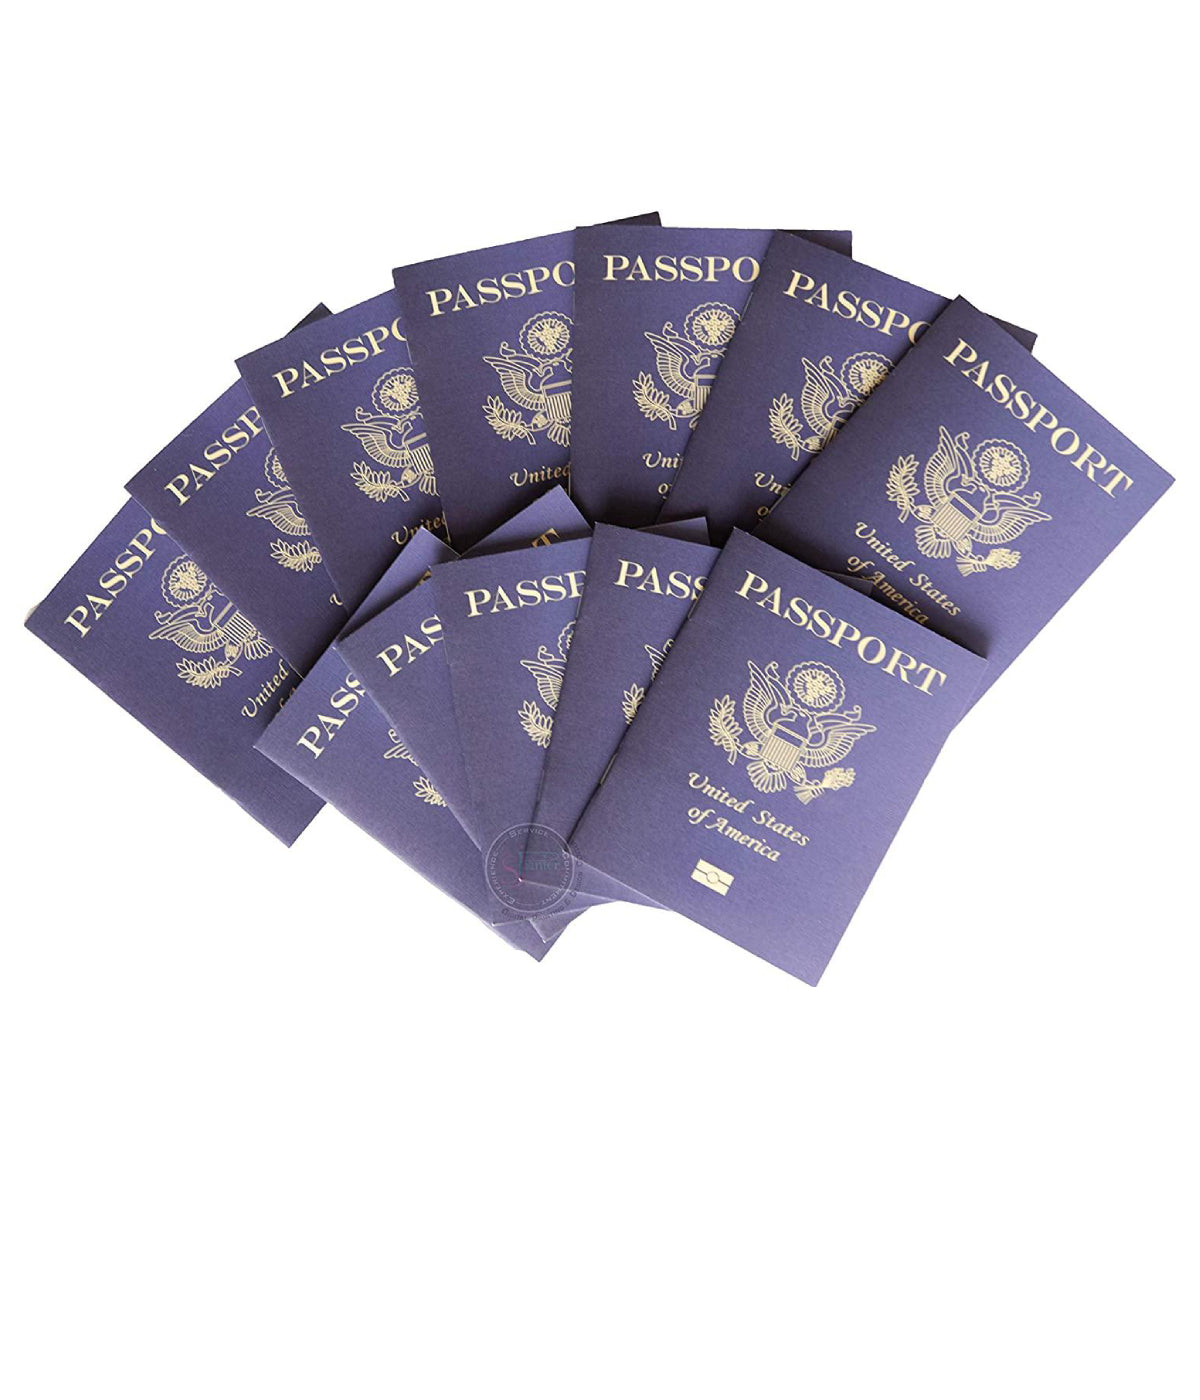 Pretend-Passports - SJPrinter 